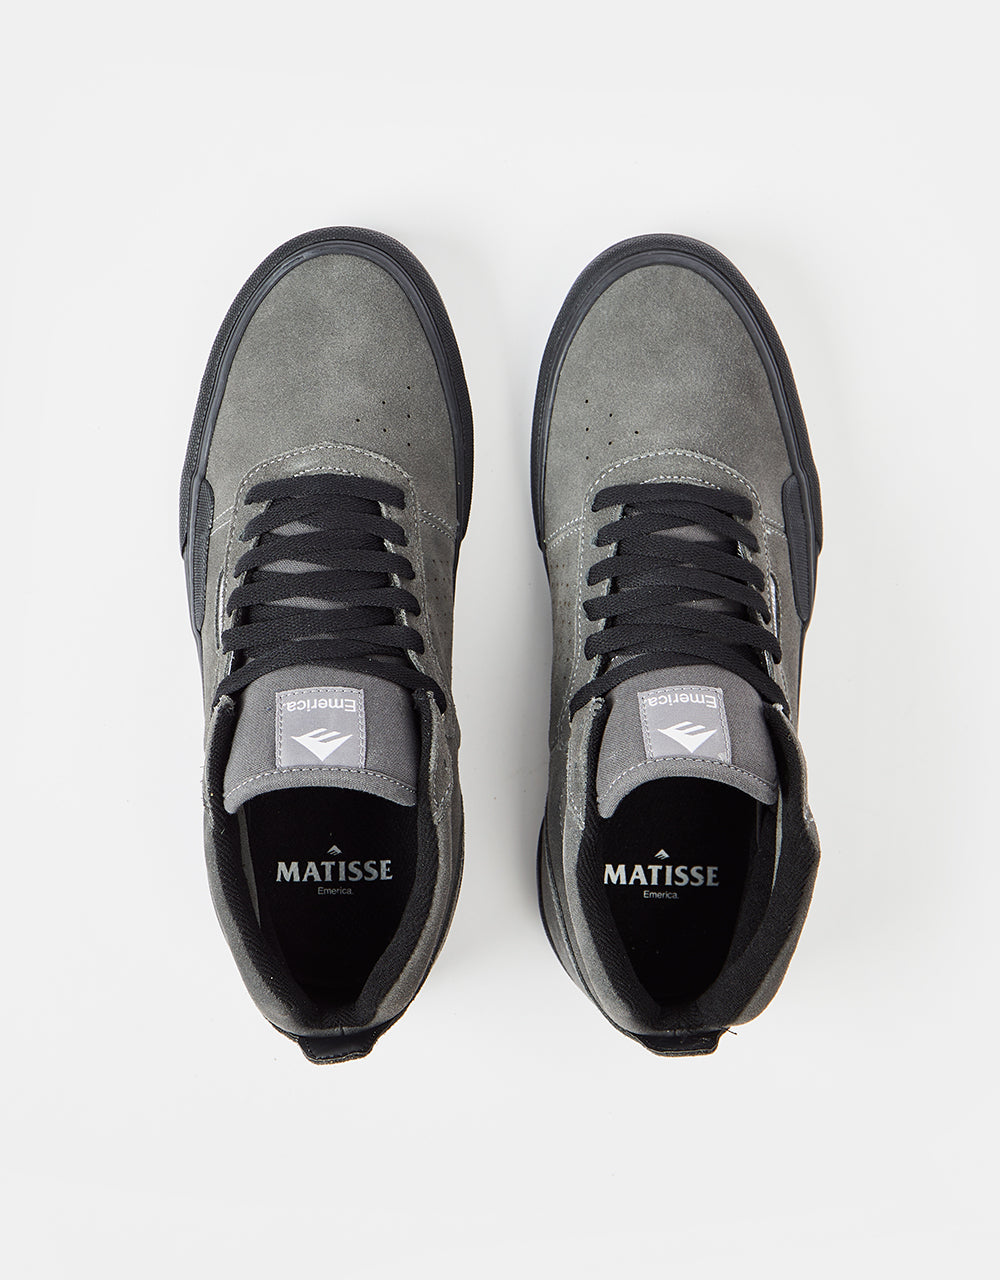 Emerica Pillar Skate Shoes - Grey/Black